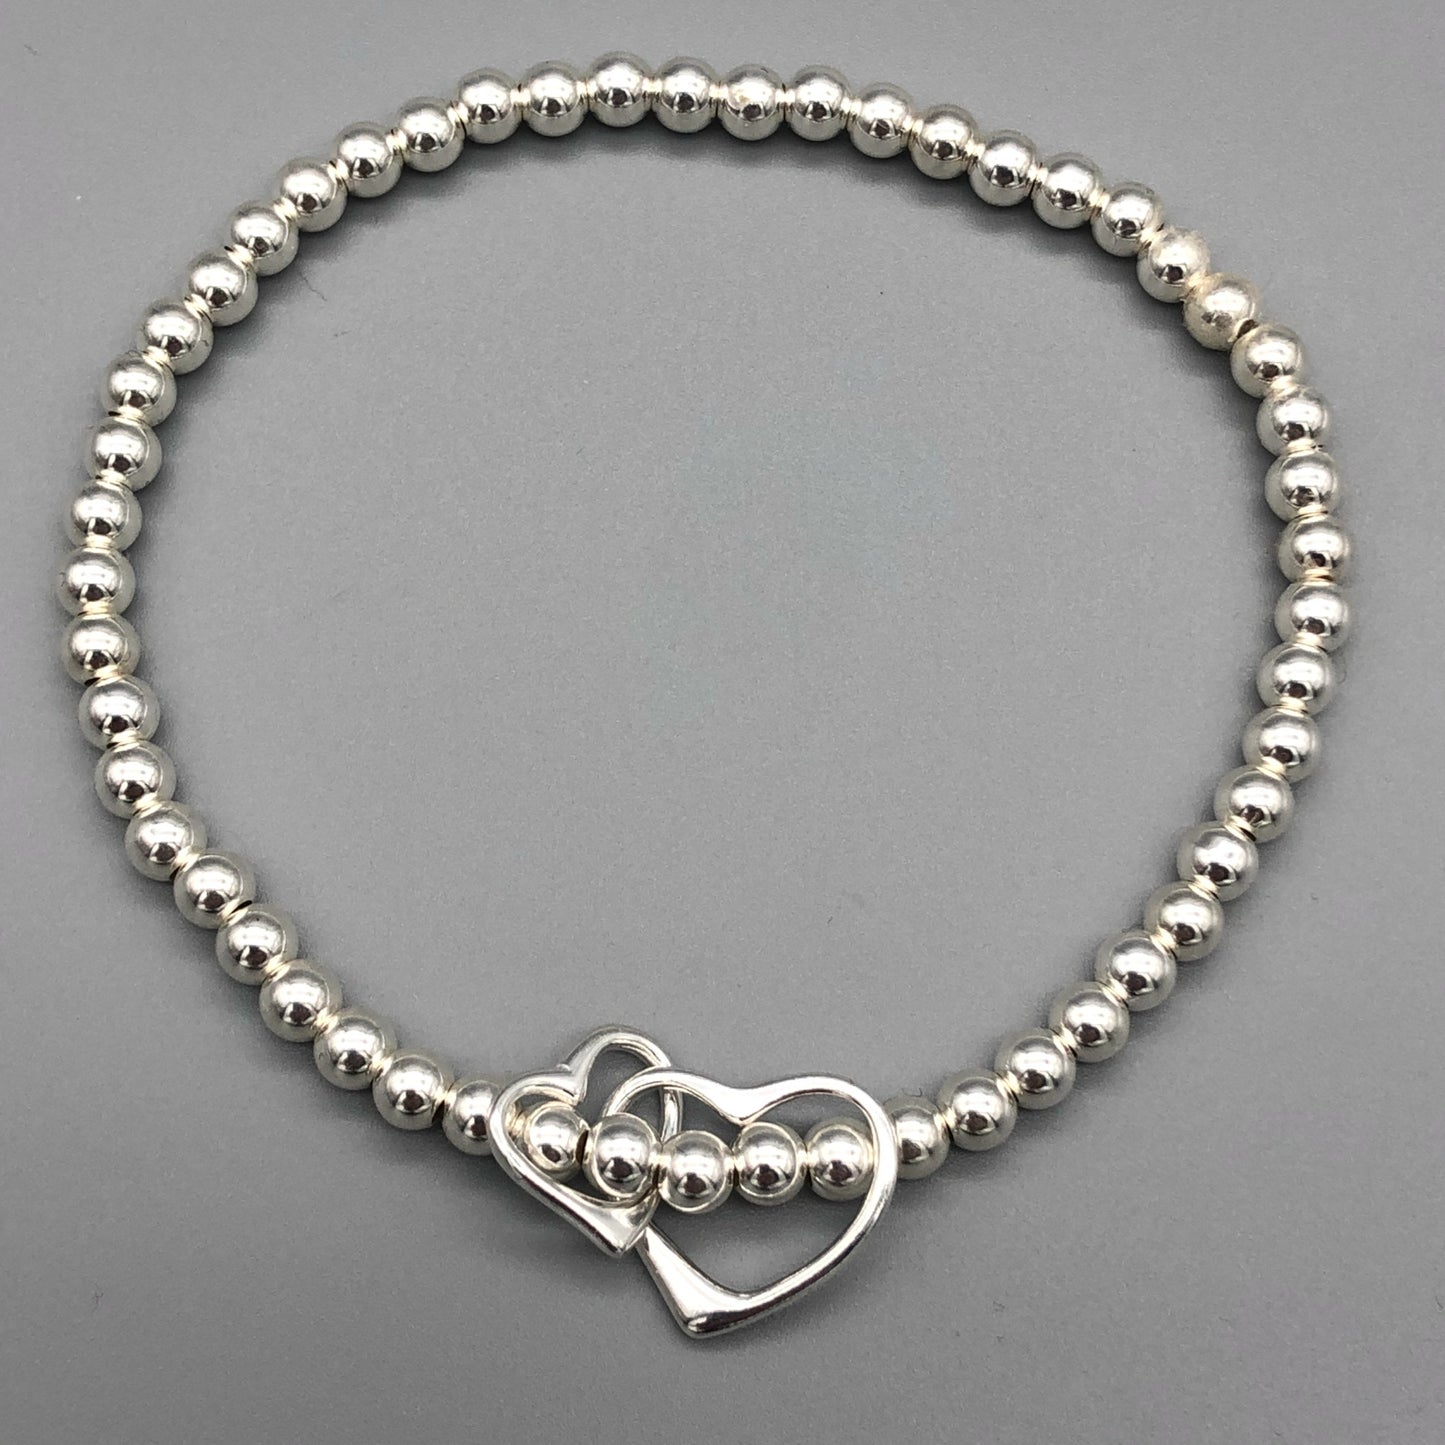 Interlinked open heart charm sterling silver hand-made women's stacking bracelet